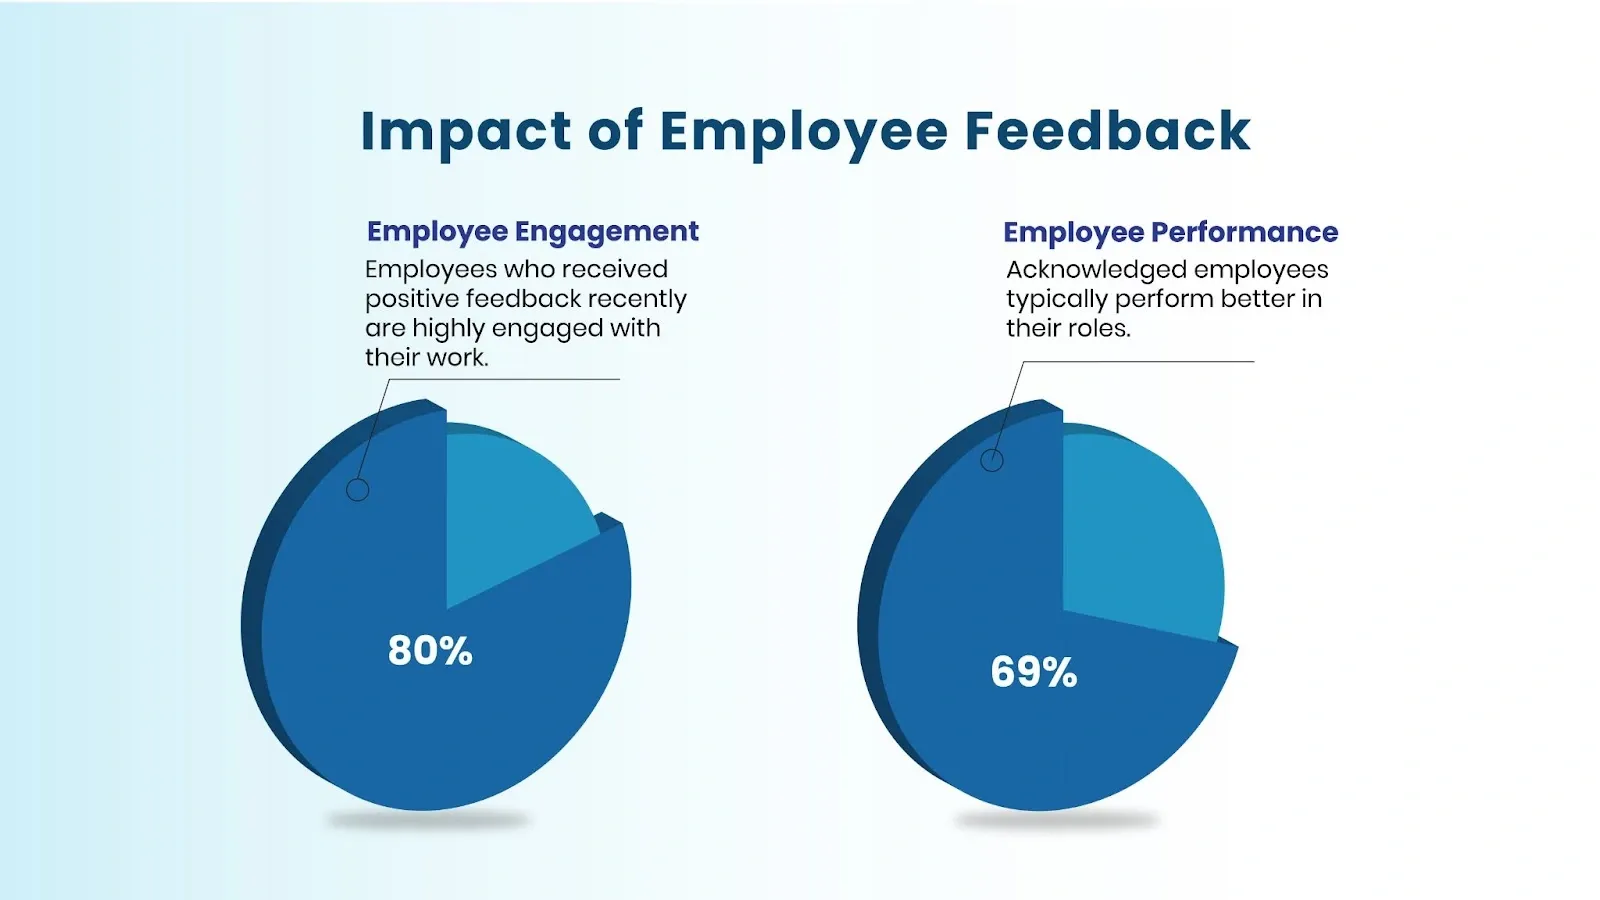 pie chart showing Impact of Employee Feedback